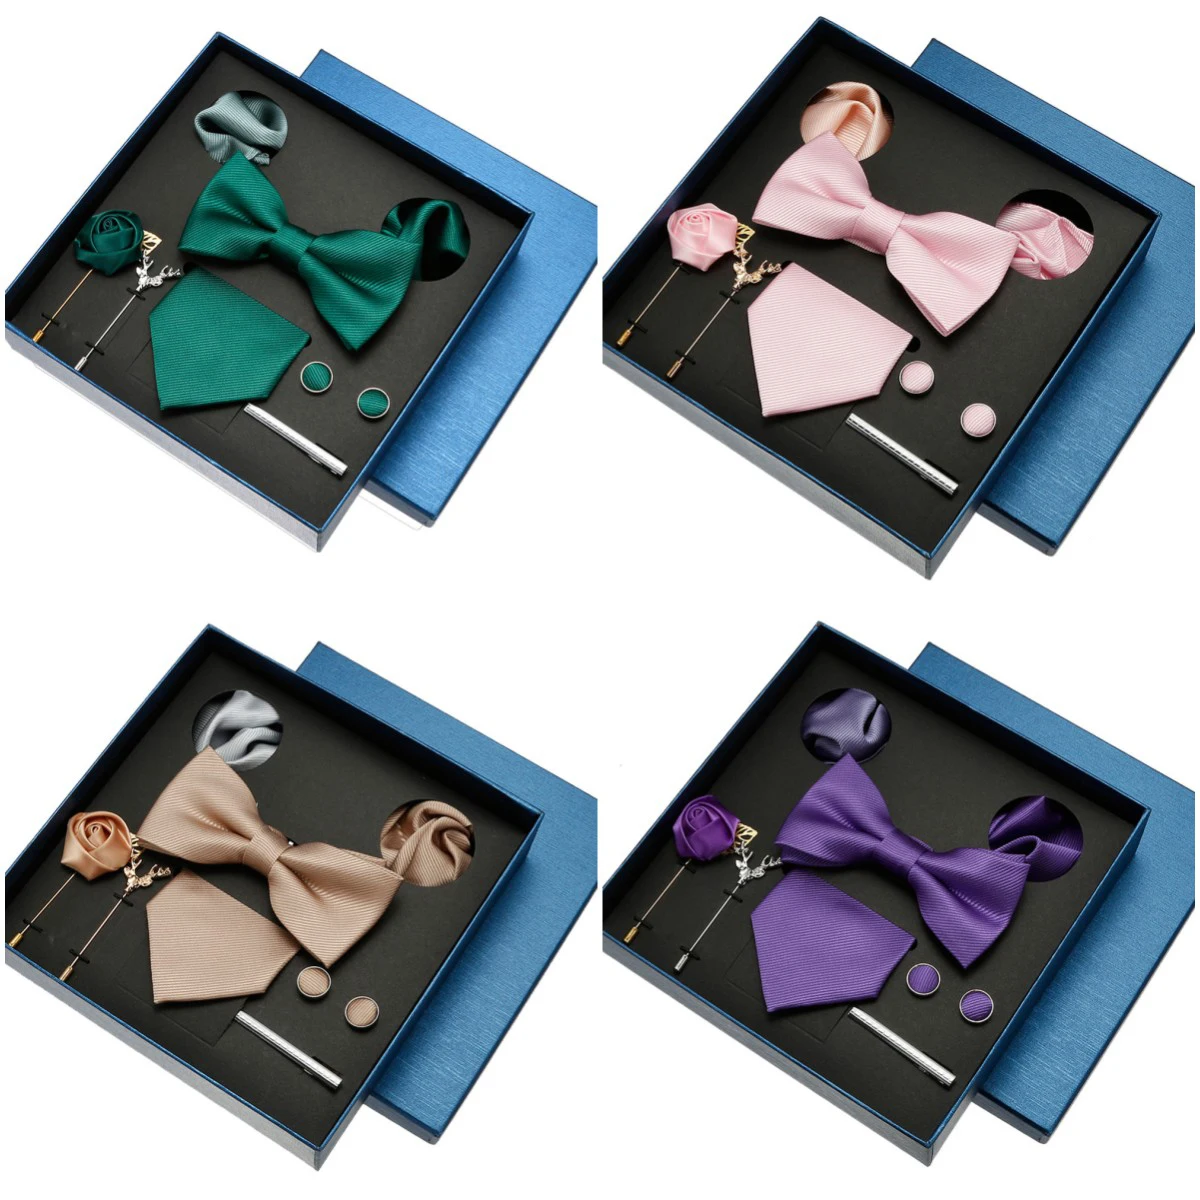 

Men's Ties Business Suit Ties Hankies For Men Fashion Necktie Bowtie Brooches Pin Cufflinks and Tie Clip Wedding Gift Box Set